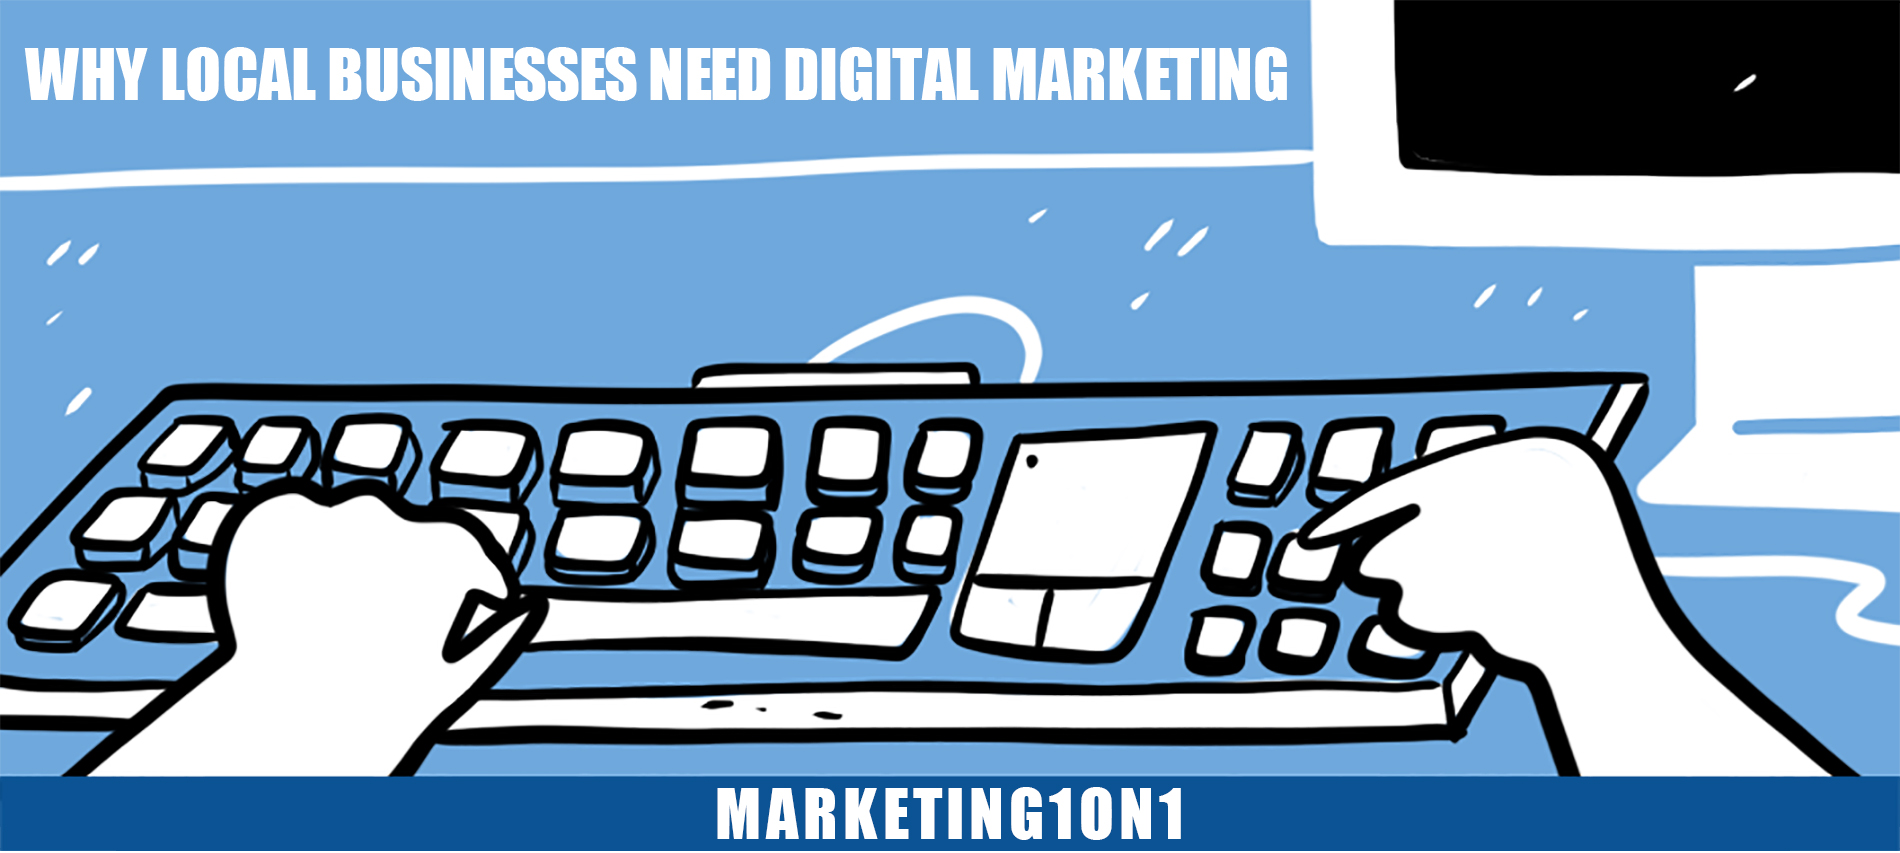 why-local-businesses-need-digital-marketing-img.jpg